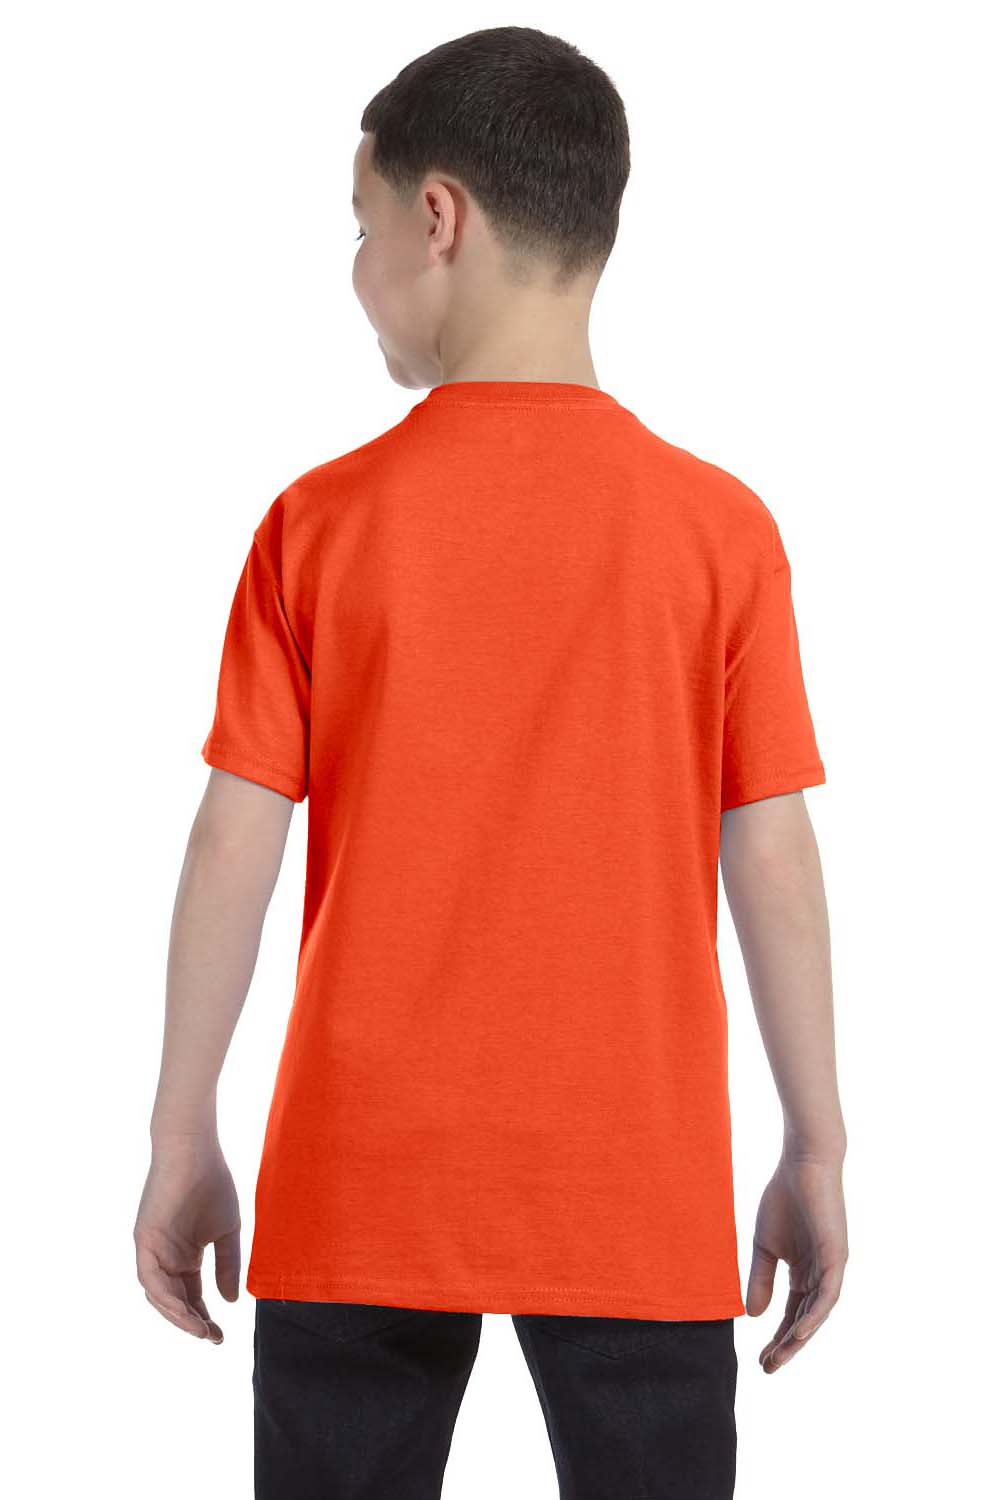 Jerzees 29B Youth Dri-Power Moisture Wicking Short Sleeve Crewneck T-Shirt Burnt Orange Back